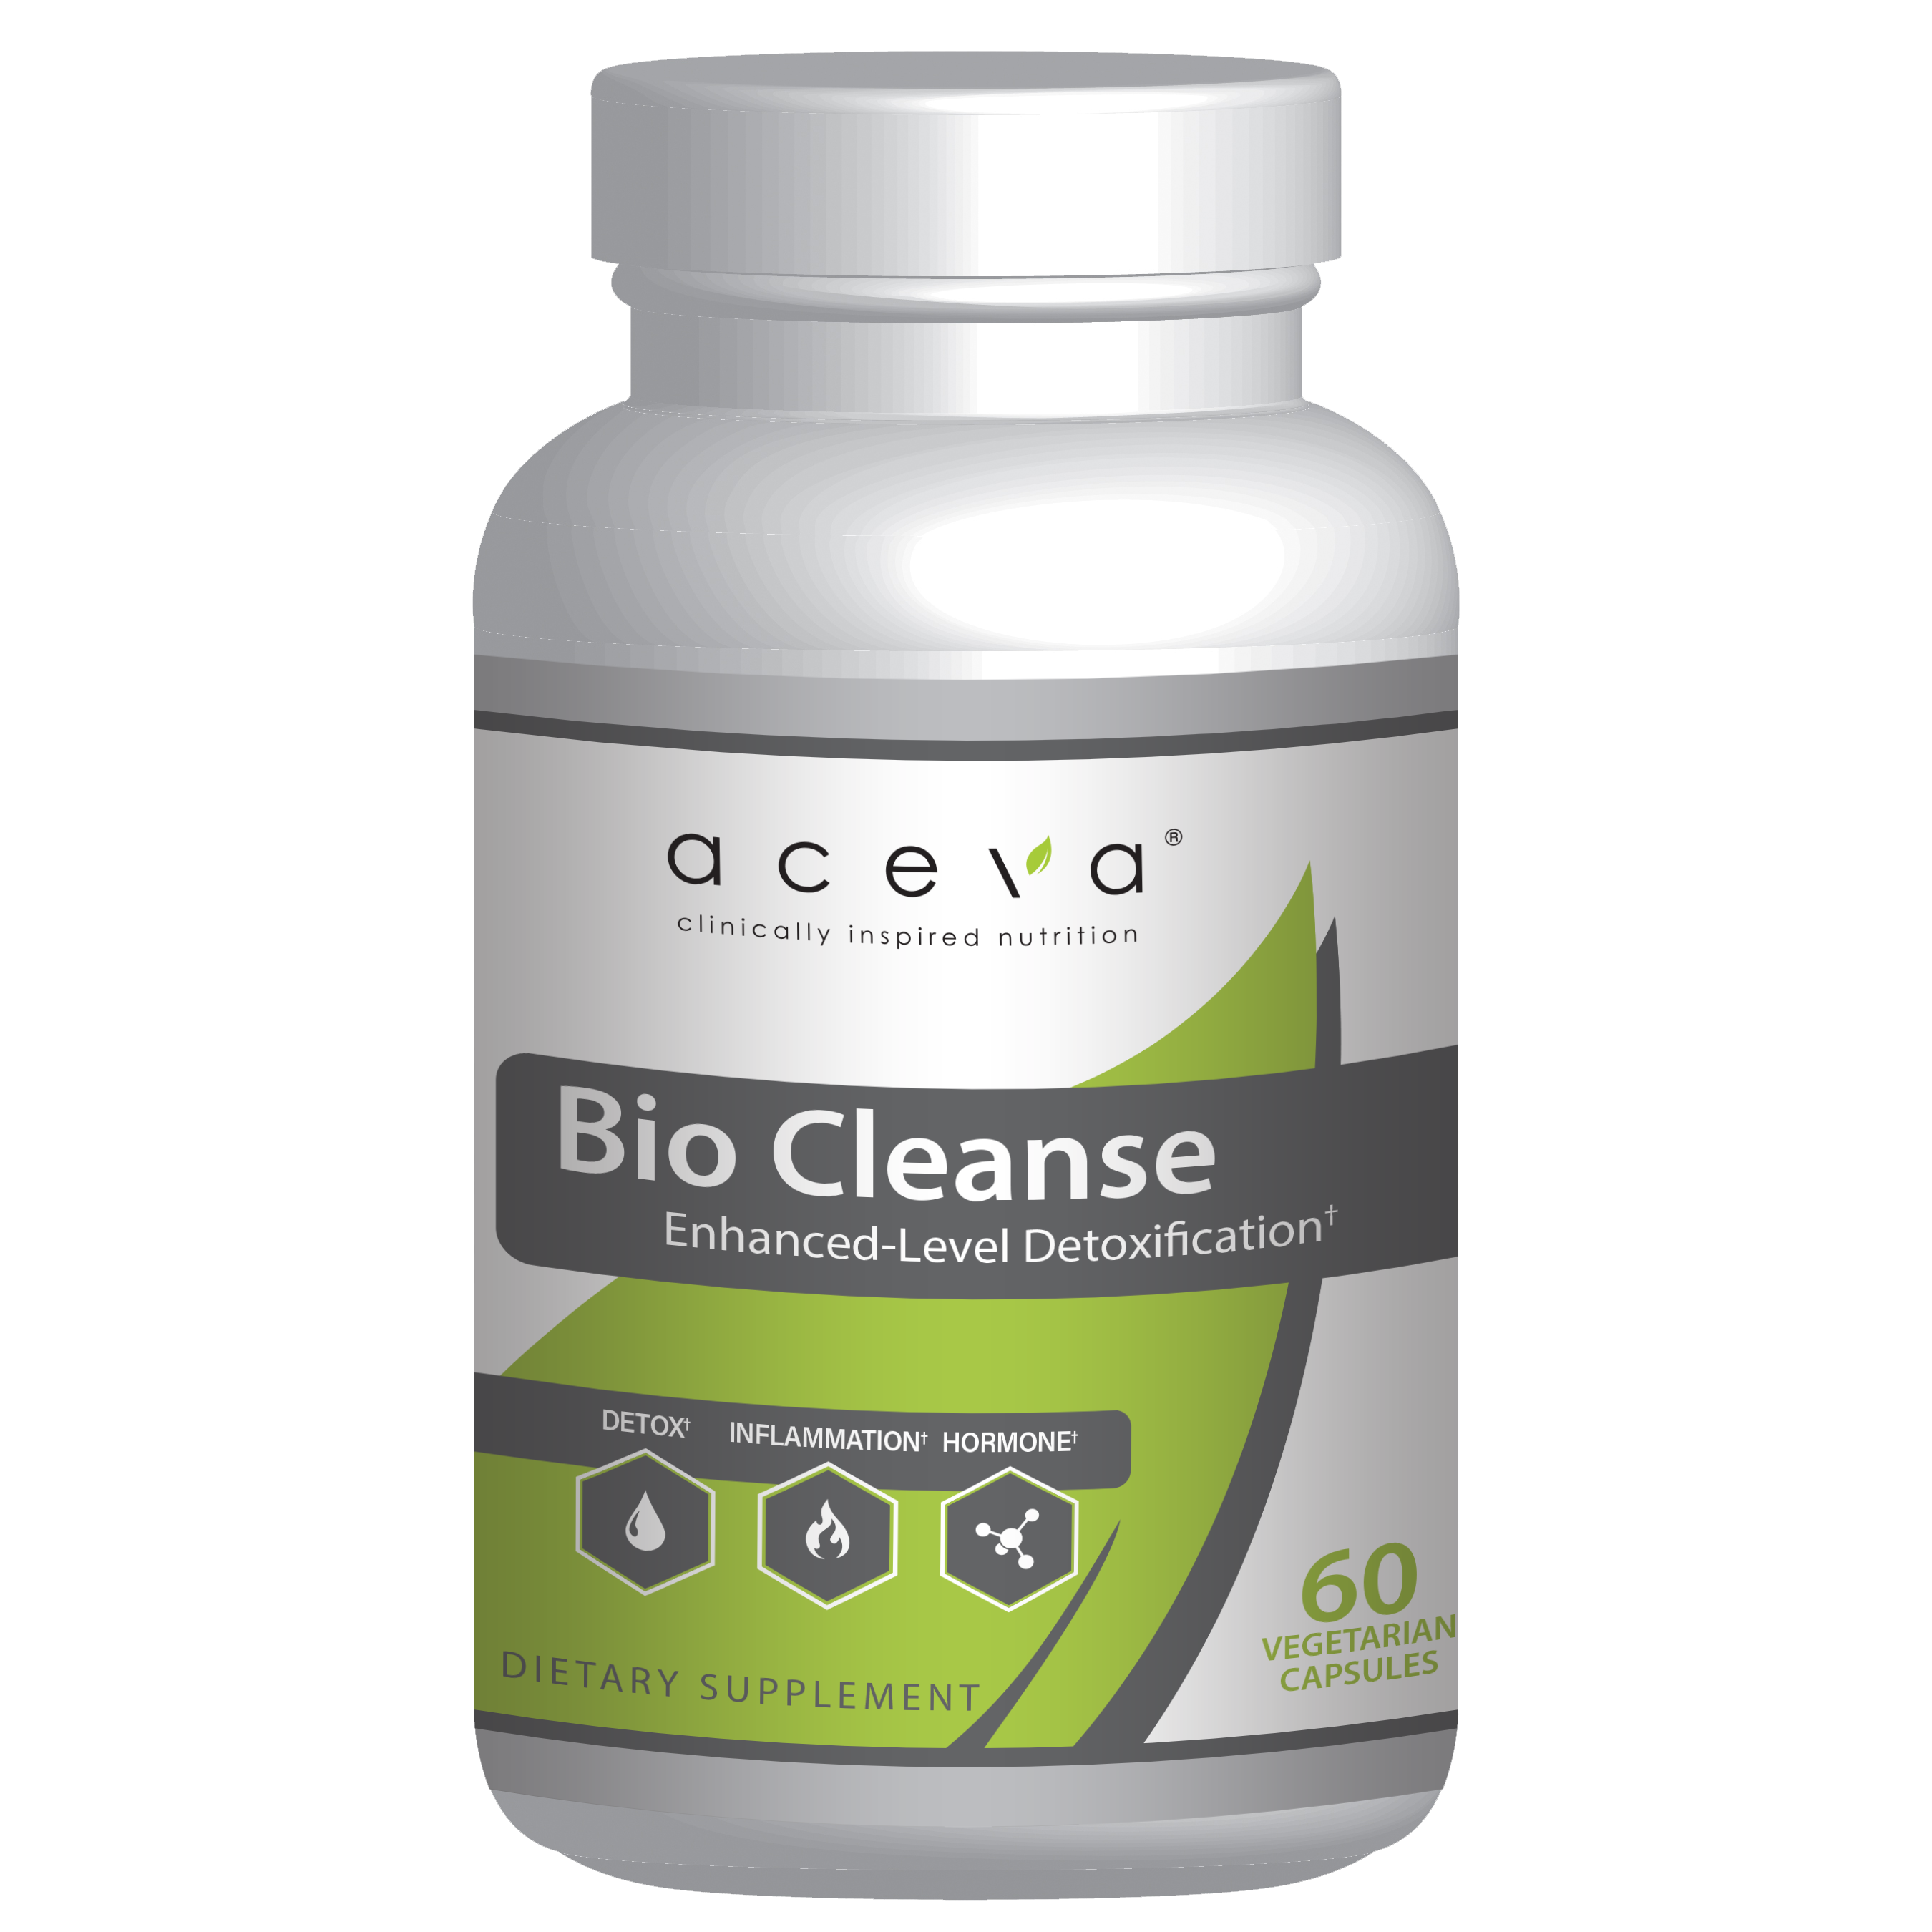 Aceva Bio Cleanse Bottle Image